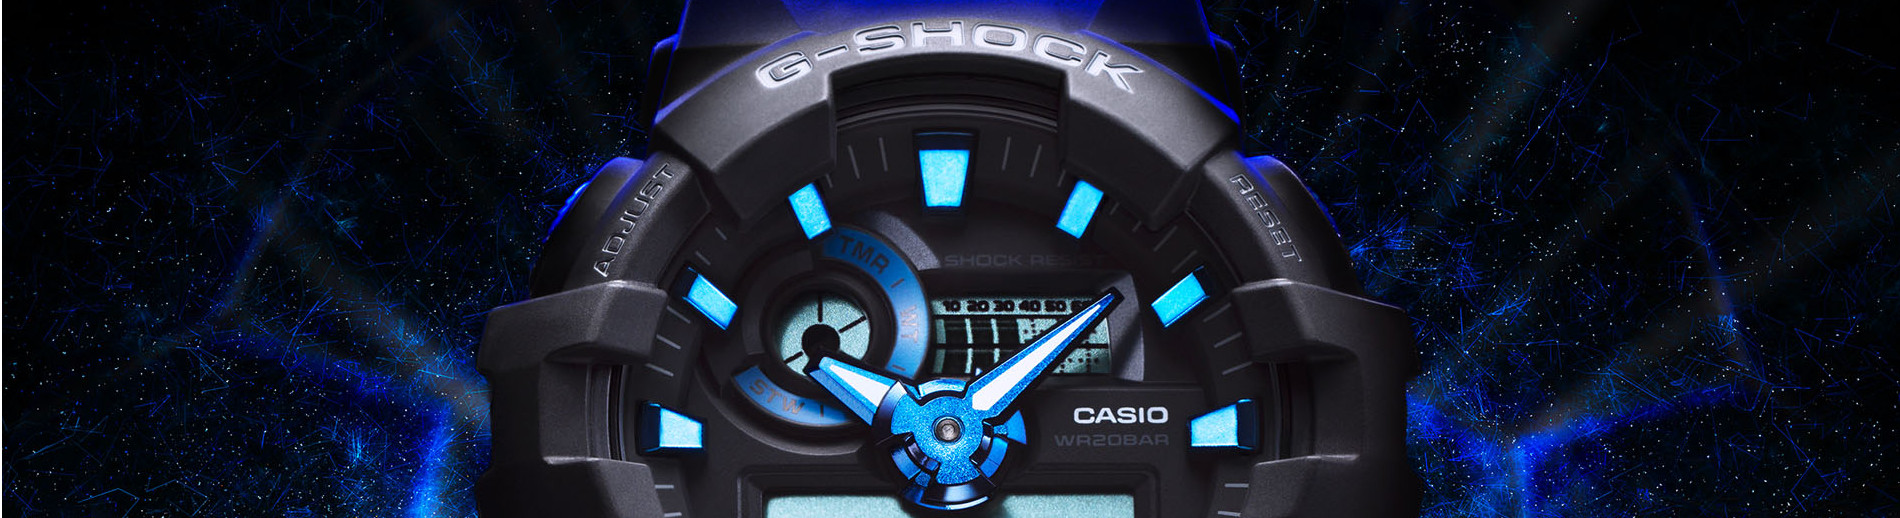 Zegarki Casio G-Shock